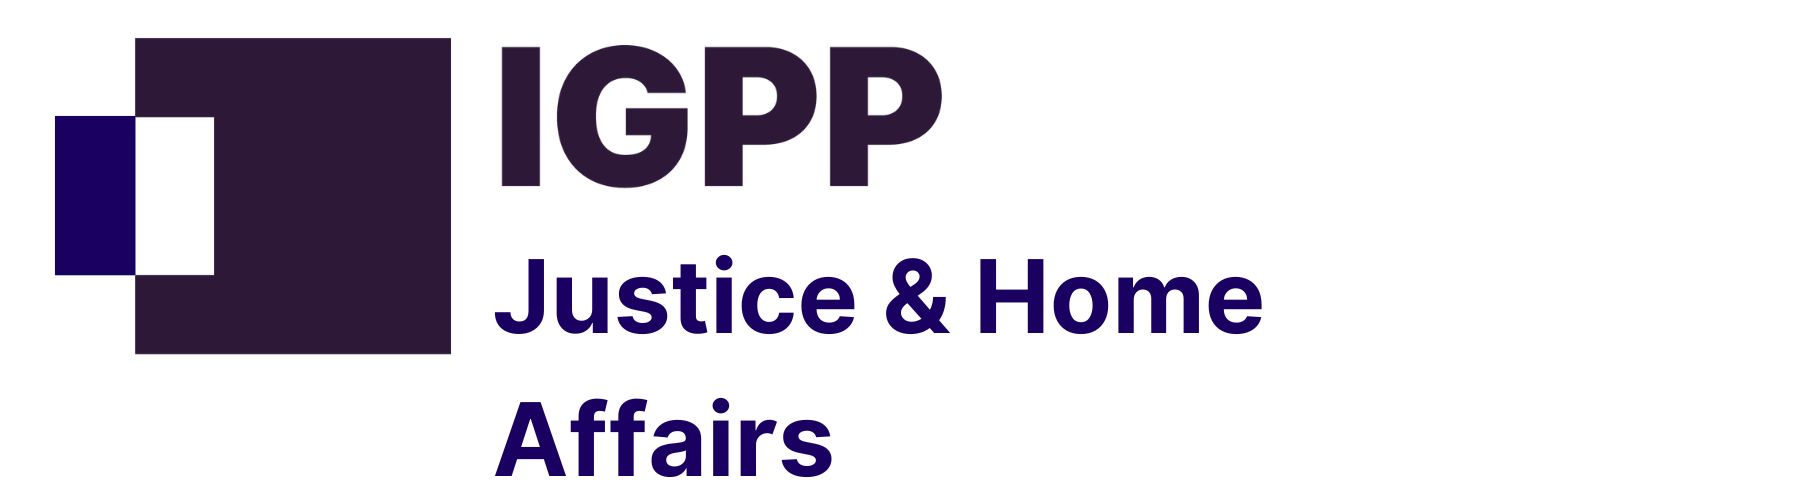 IGPP Criminal Justice and Safer Communities sub brand logo